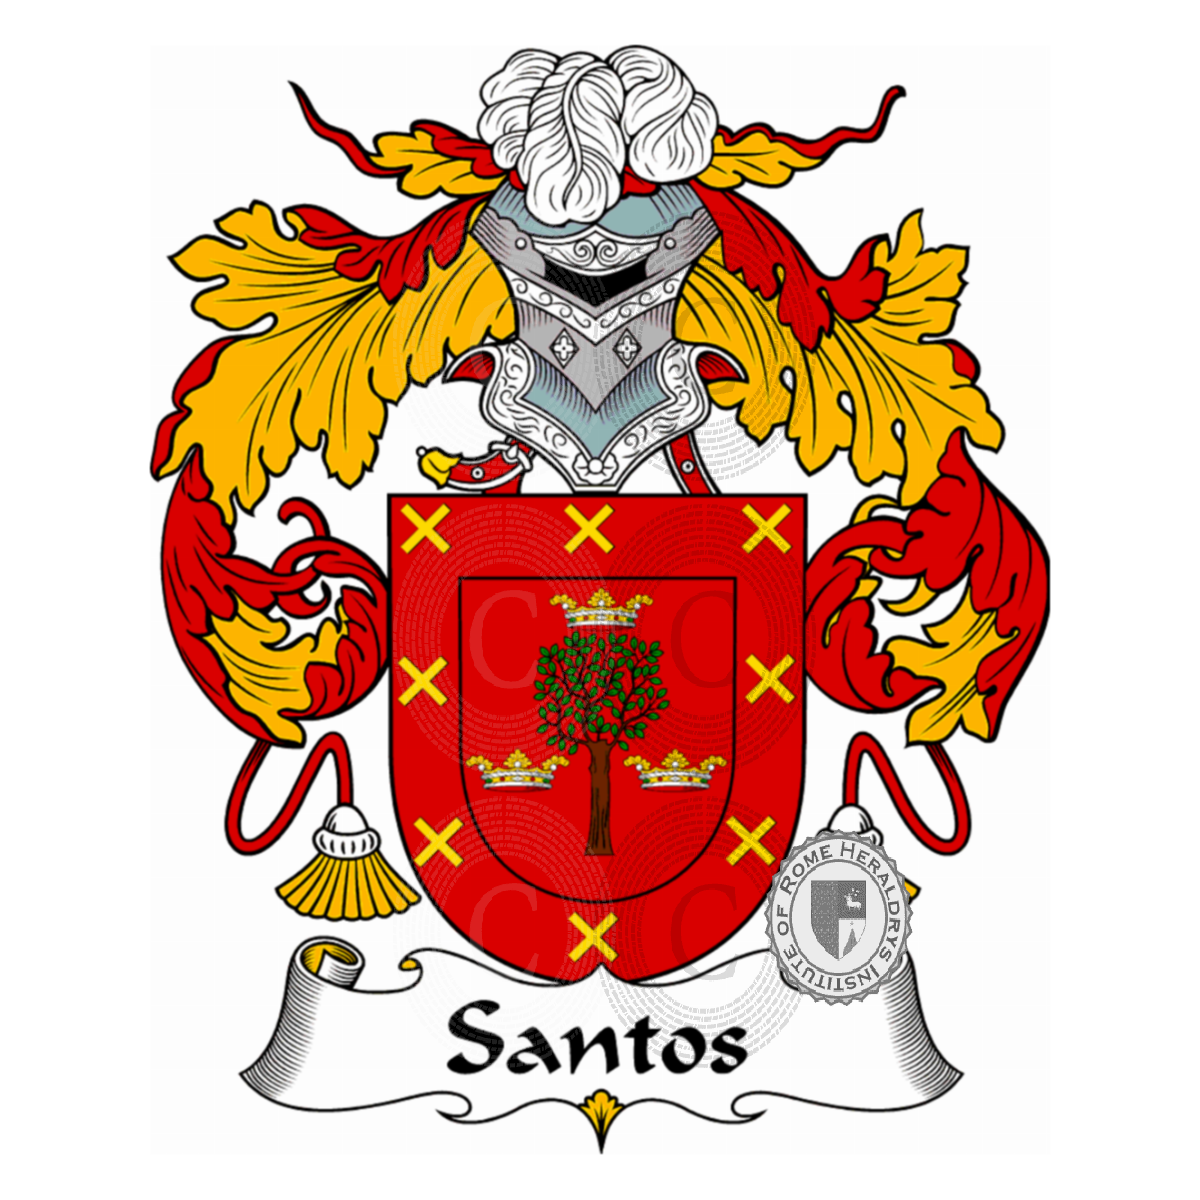 Wappen der FamilieSantos, dos Santos